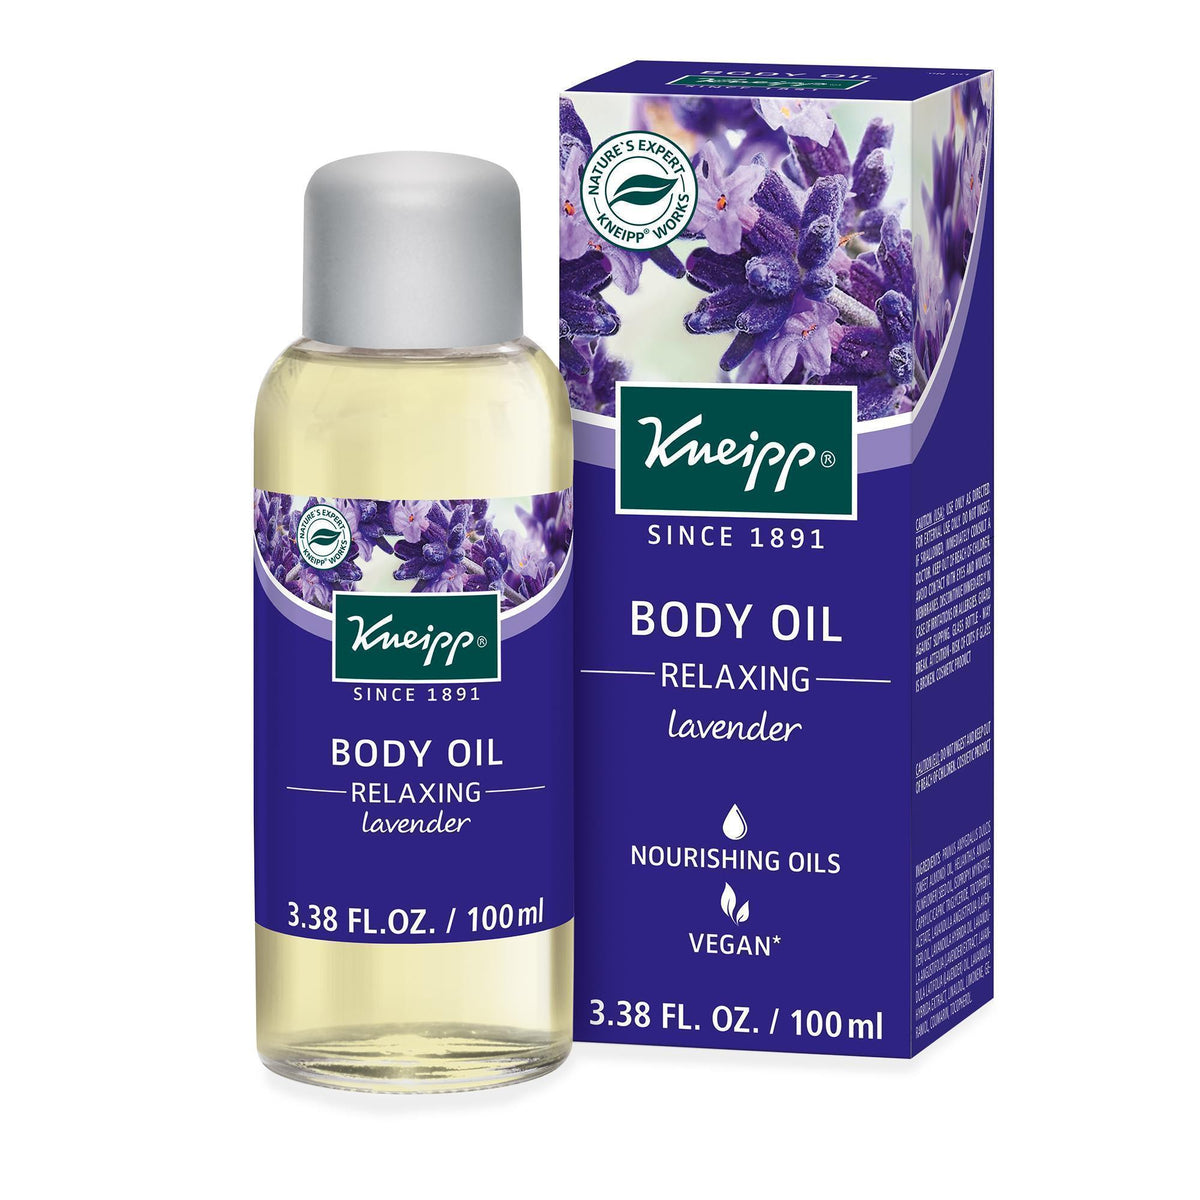 Kneipp Relaxing Body Oil